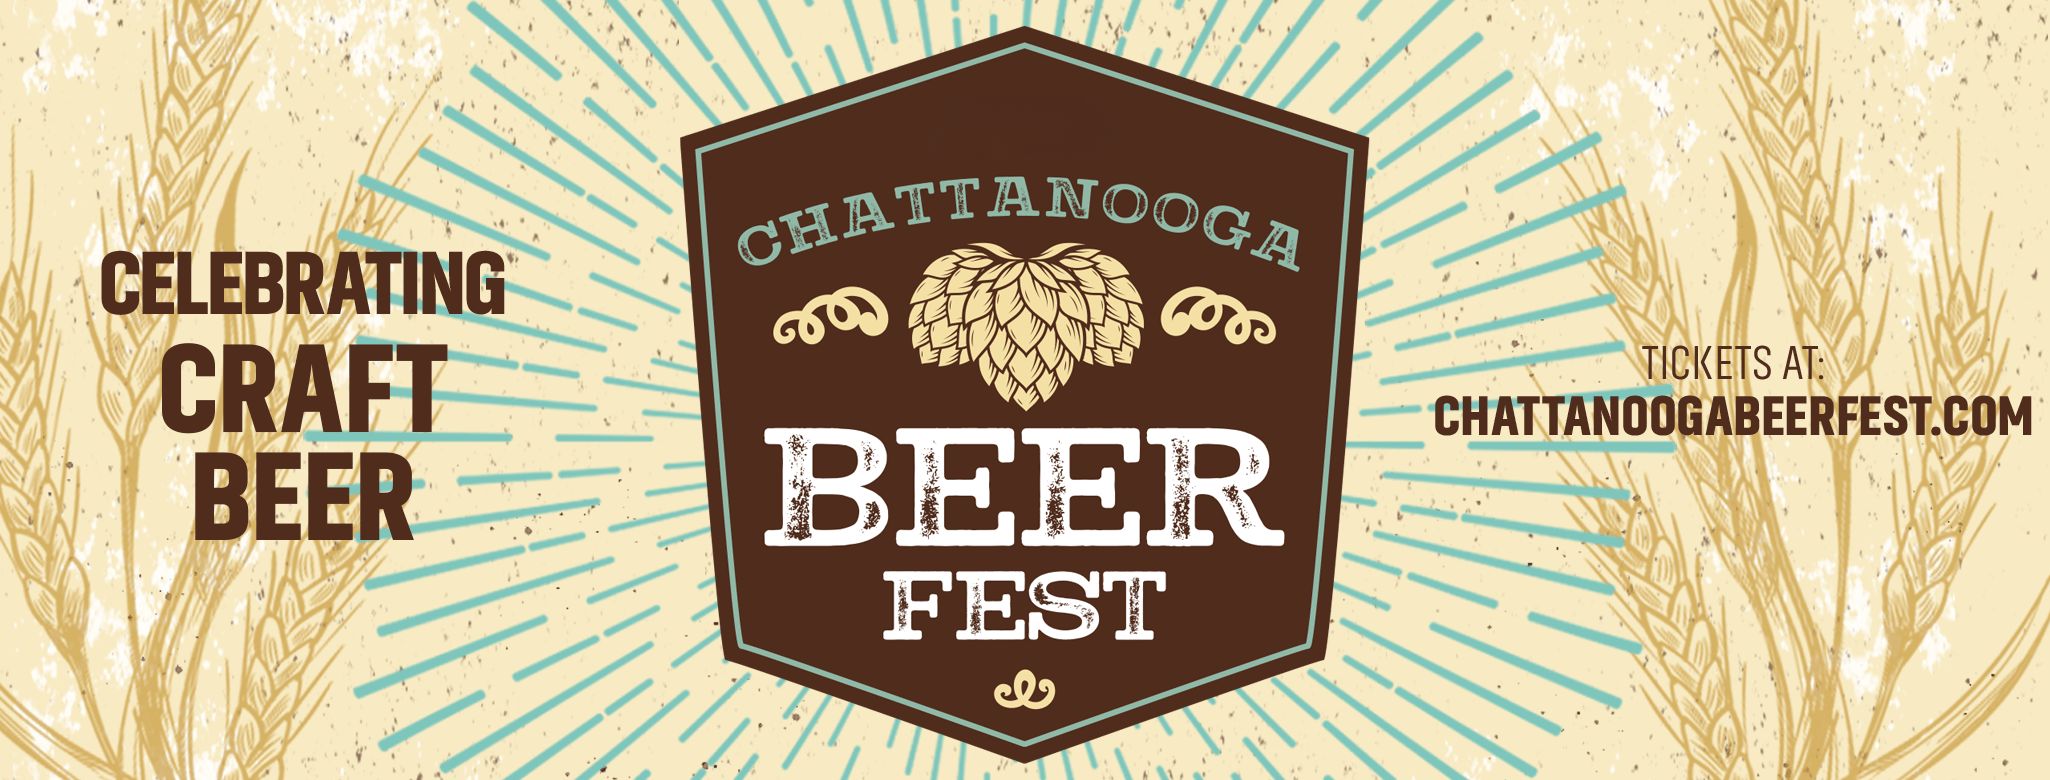 Chattanooga Beer Fest